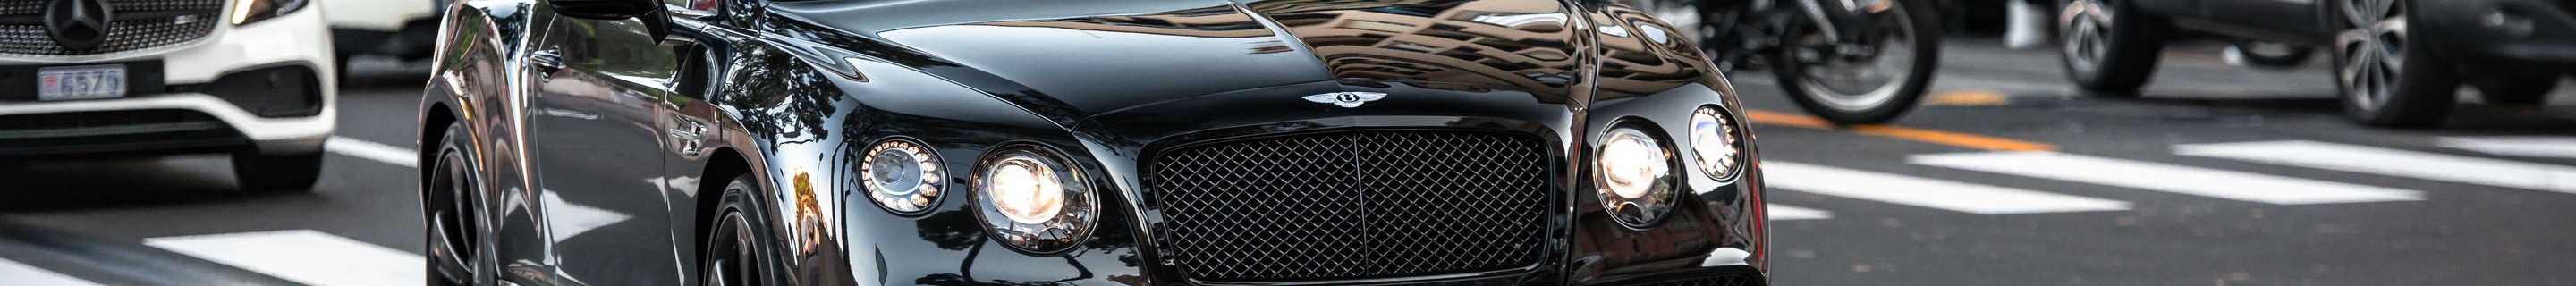 Bentley Continental GTC V8 S 2016 Black Edition